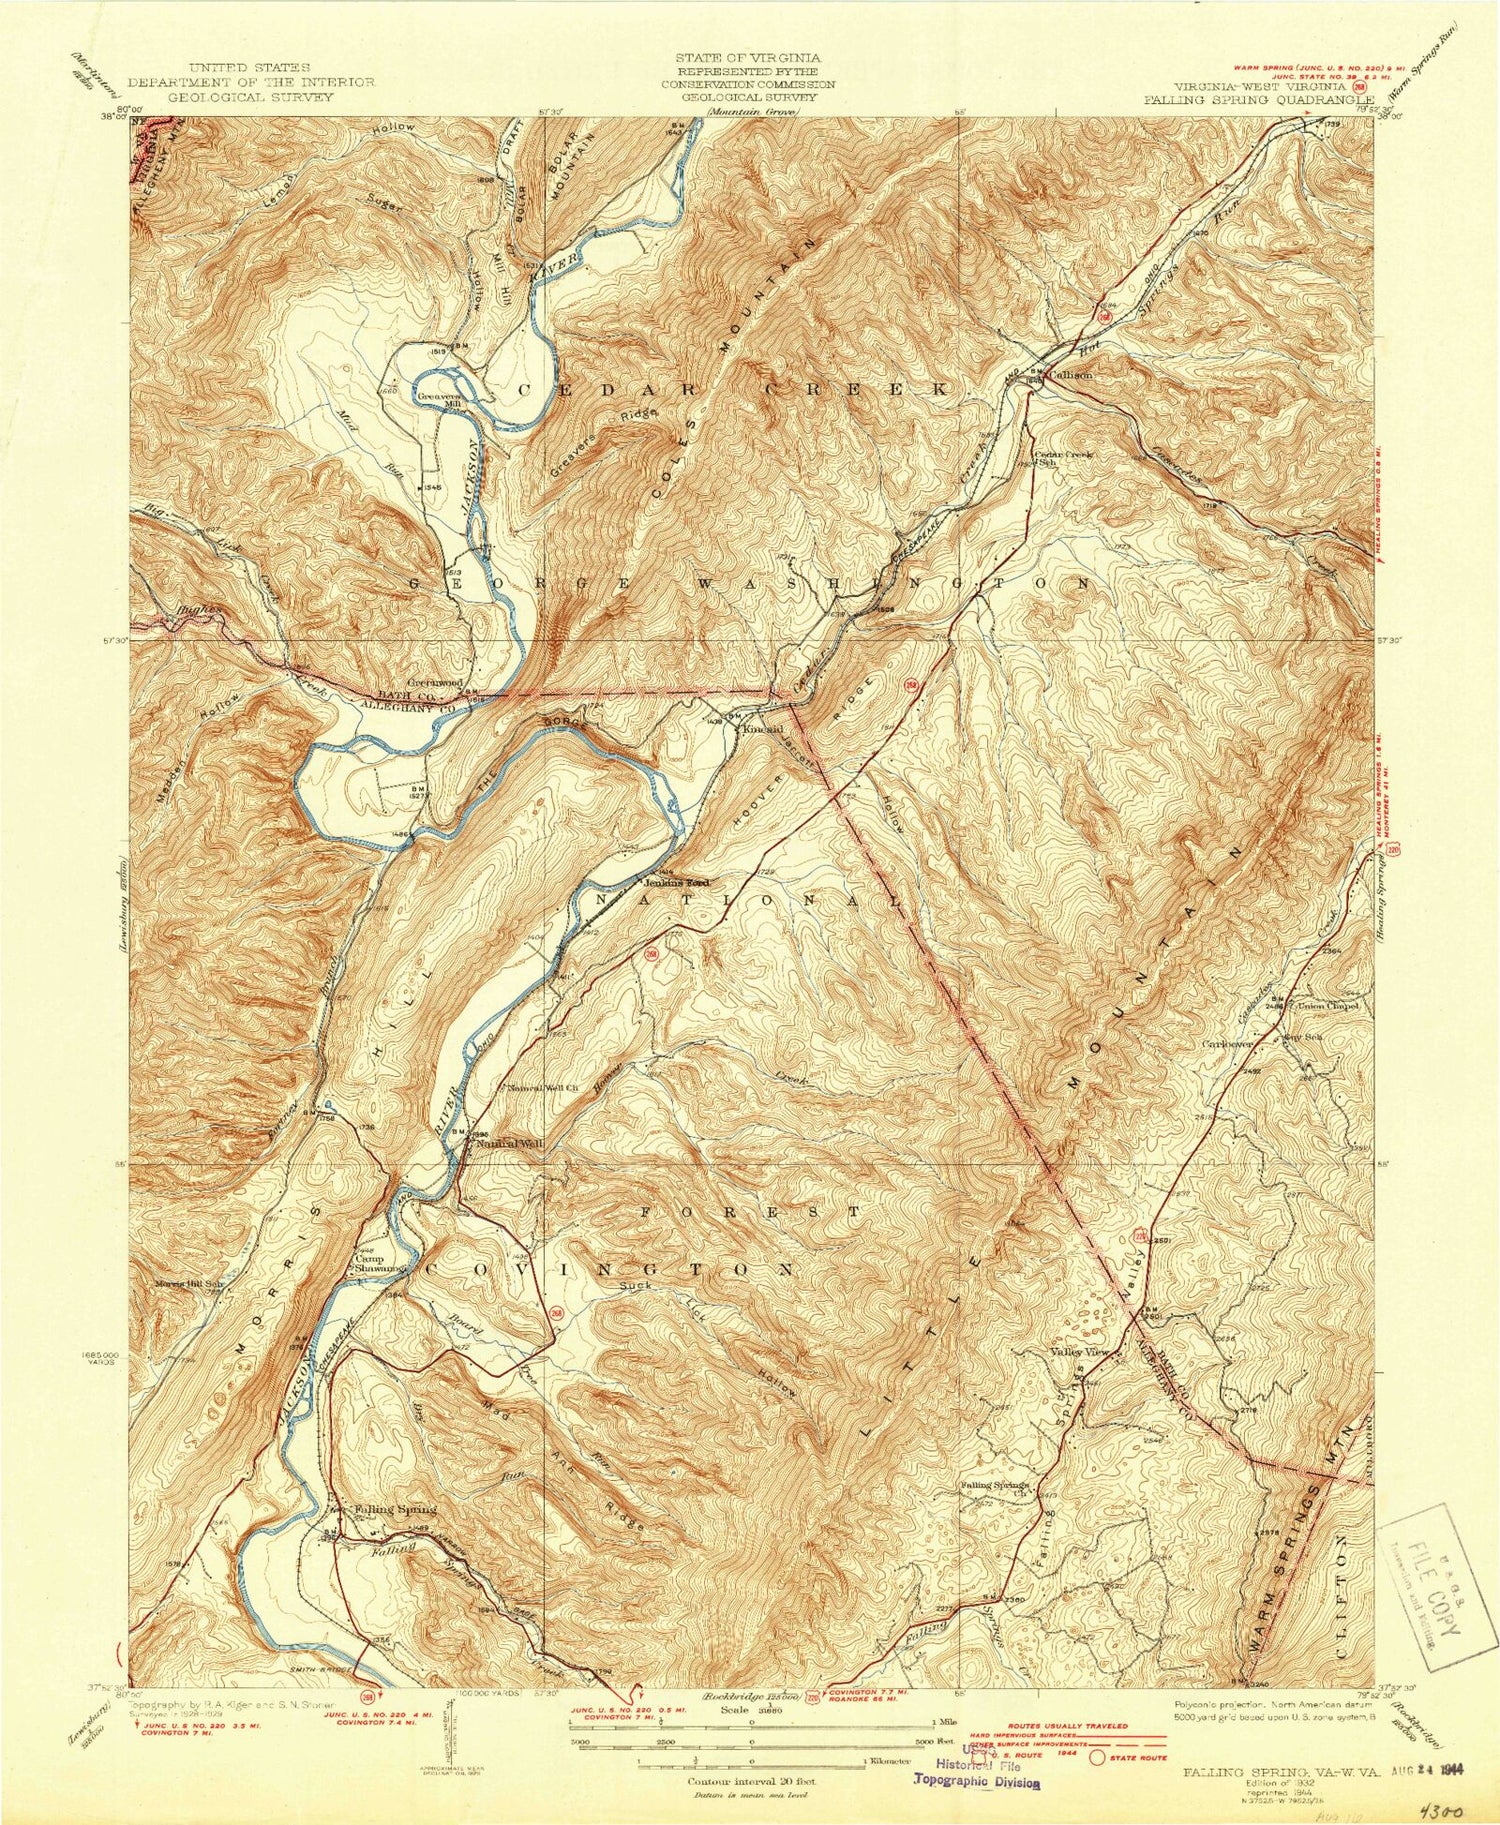 Classic USGS Falling Spring Virginia 7.5'x7.5' Topo Map Image